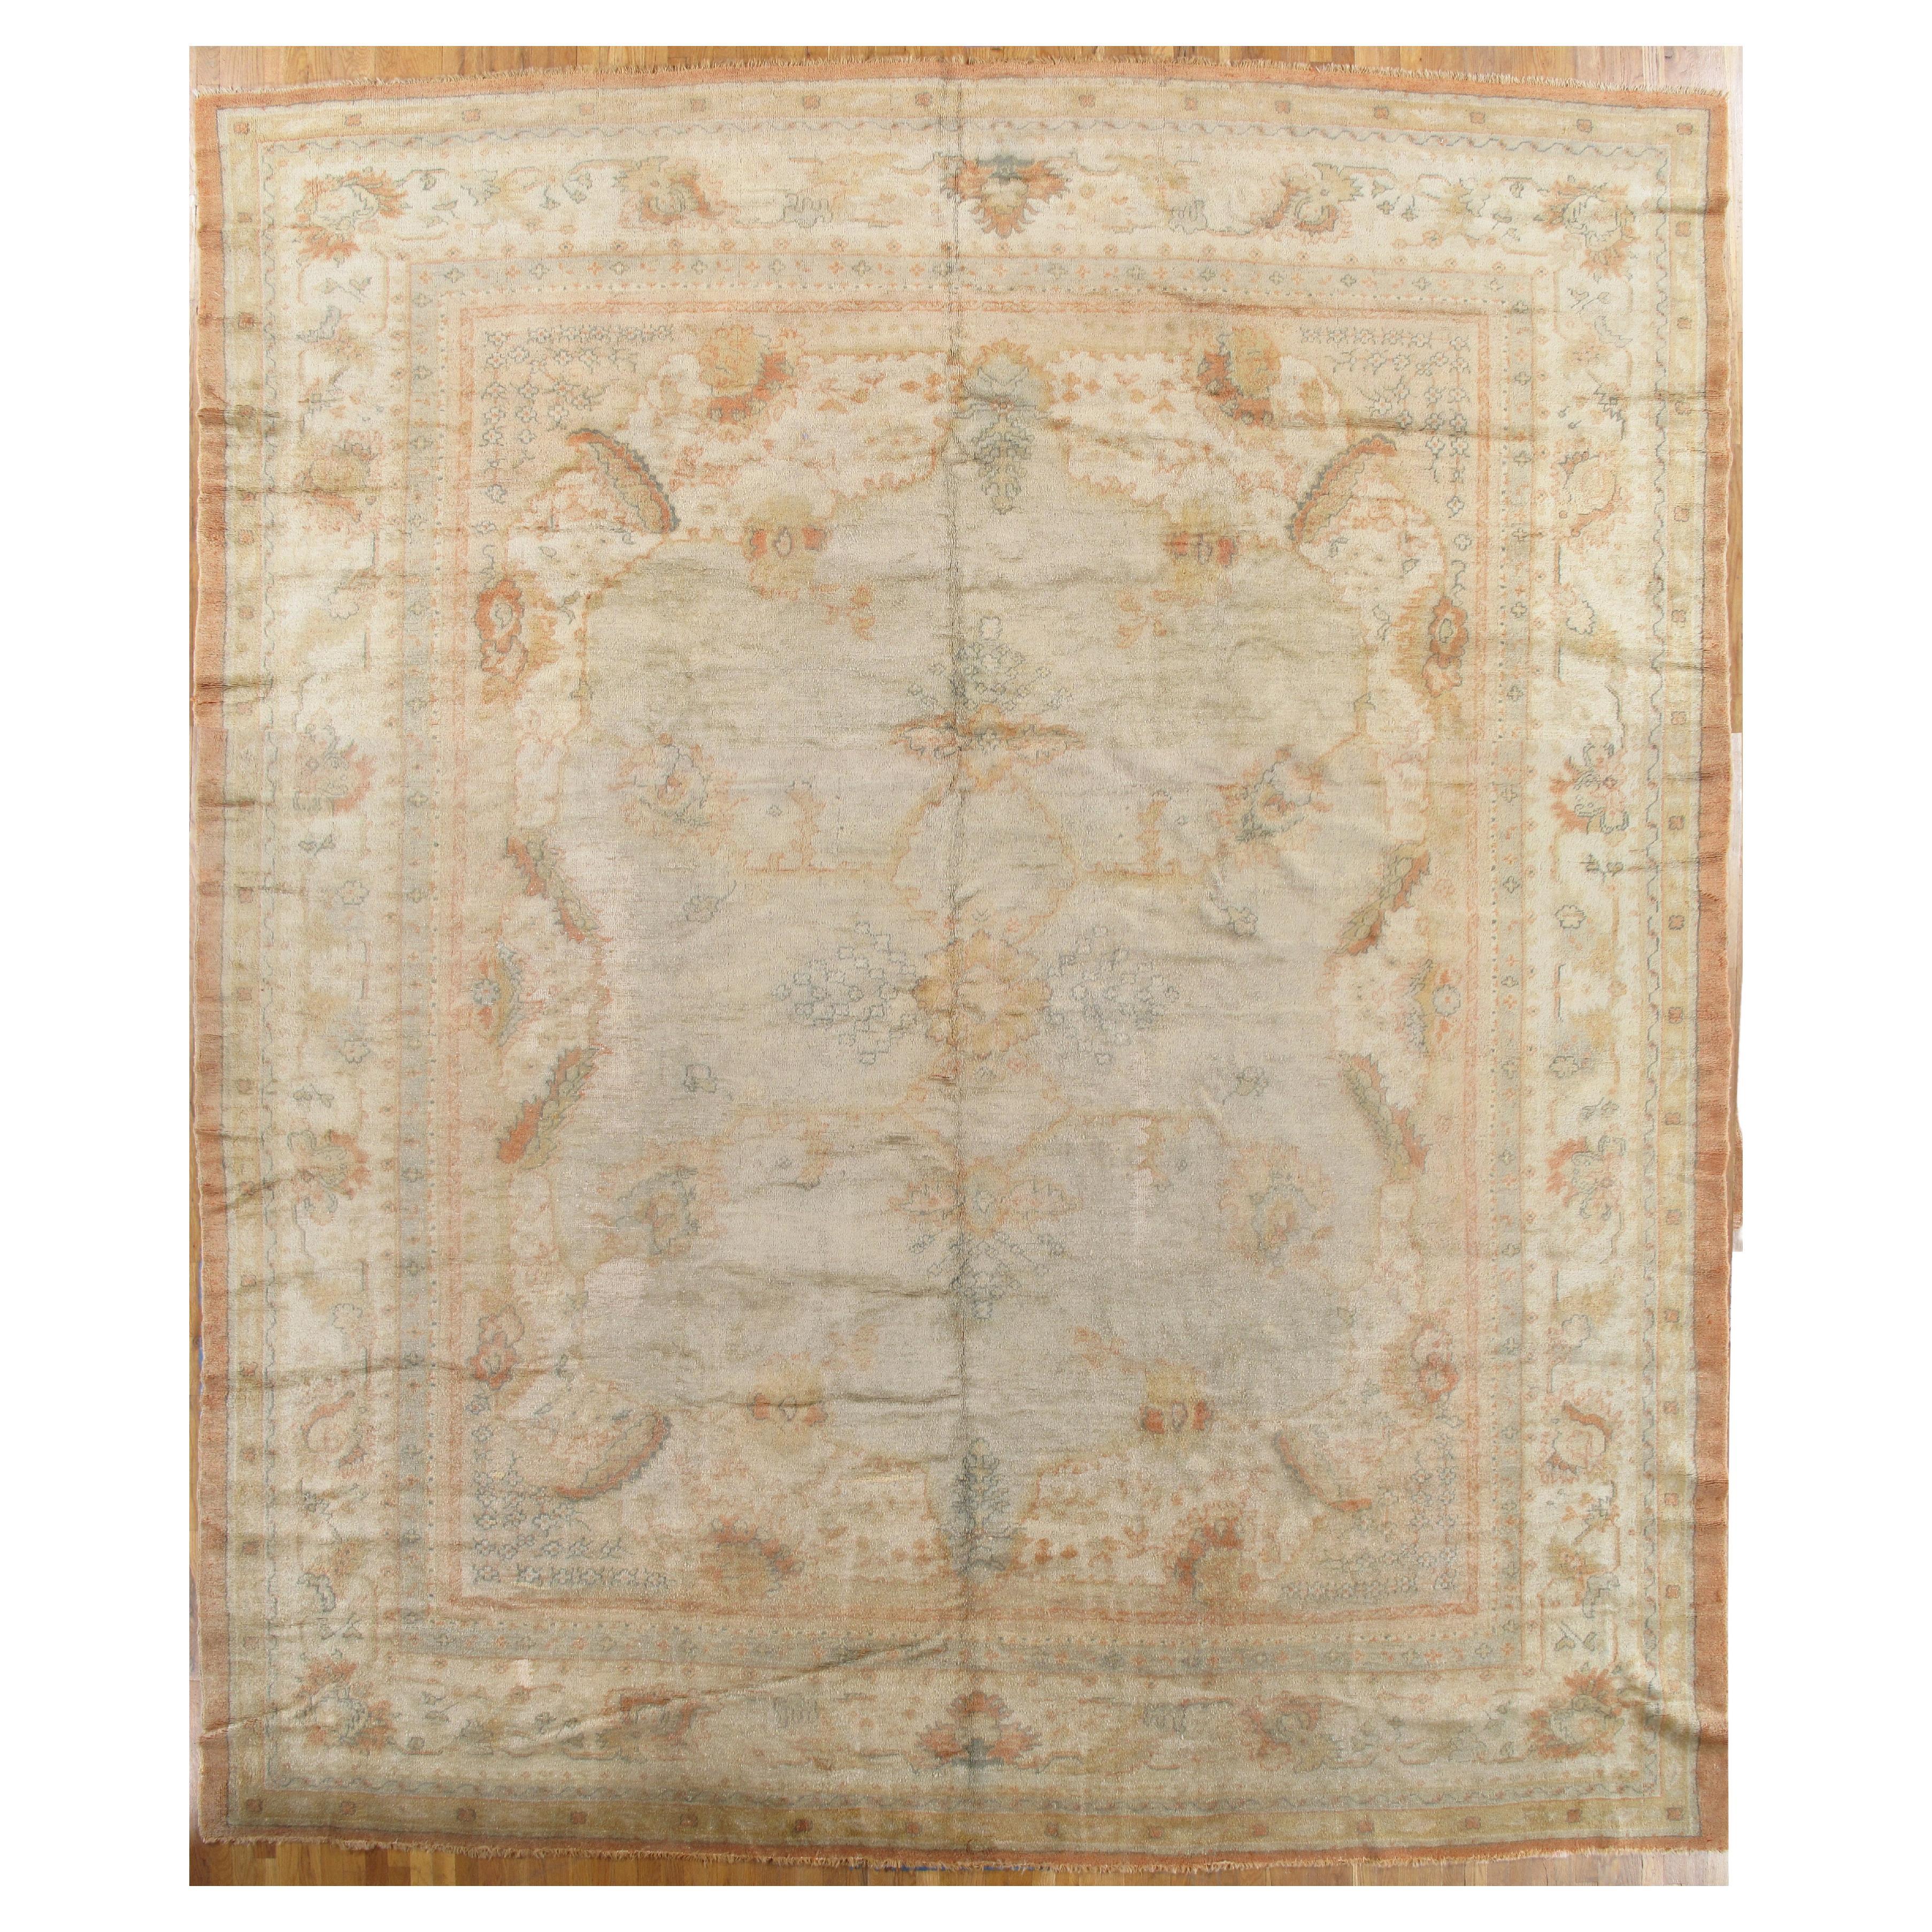 Antique Oushak Carpet, Handmade Turkish Oriental Rug Beige, Taupe Gray Pale blue For Sale